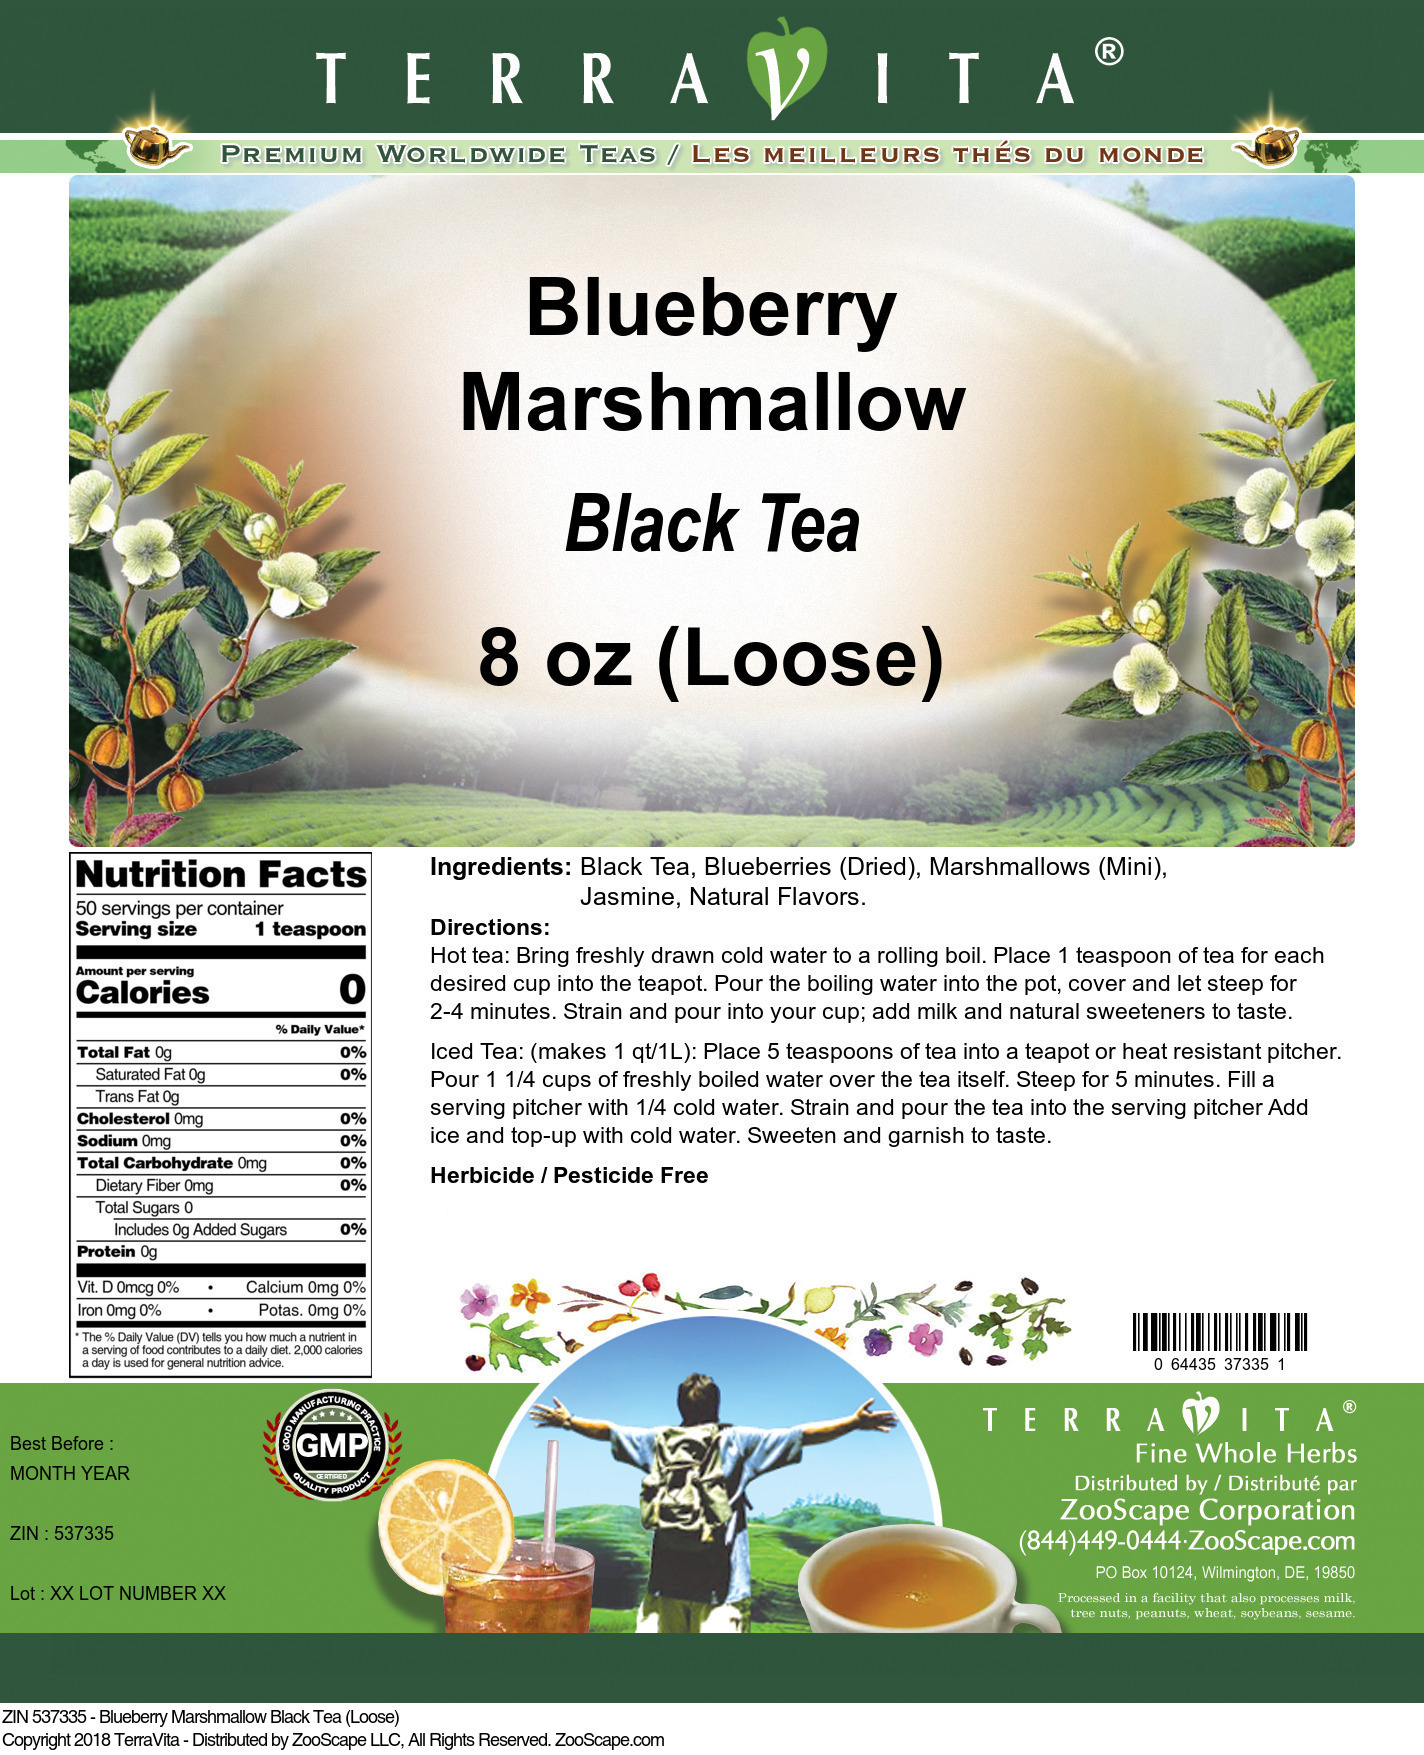 Blueberry Marshmallow Black Tea (Loose) - Label